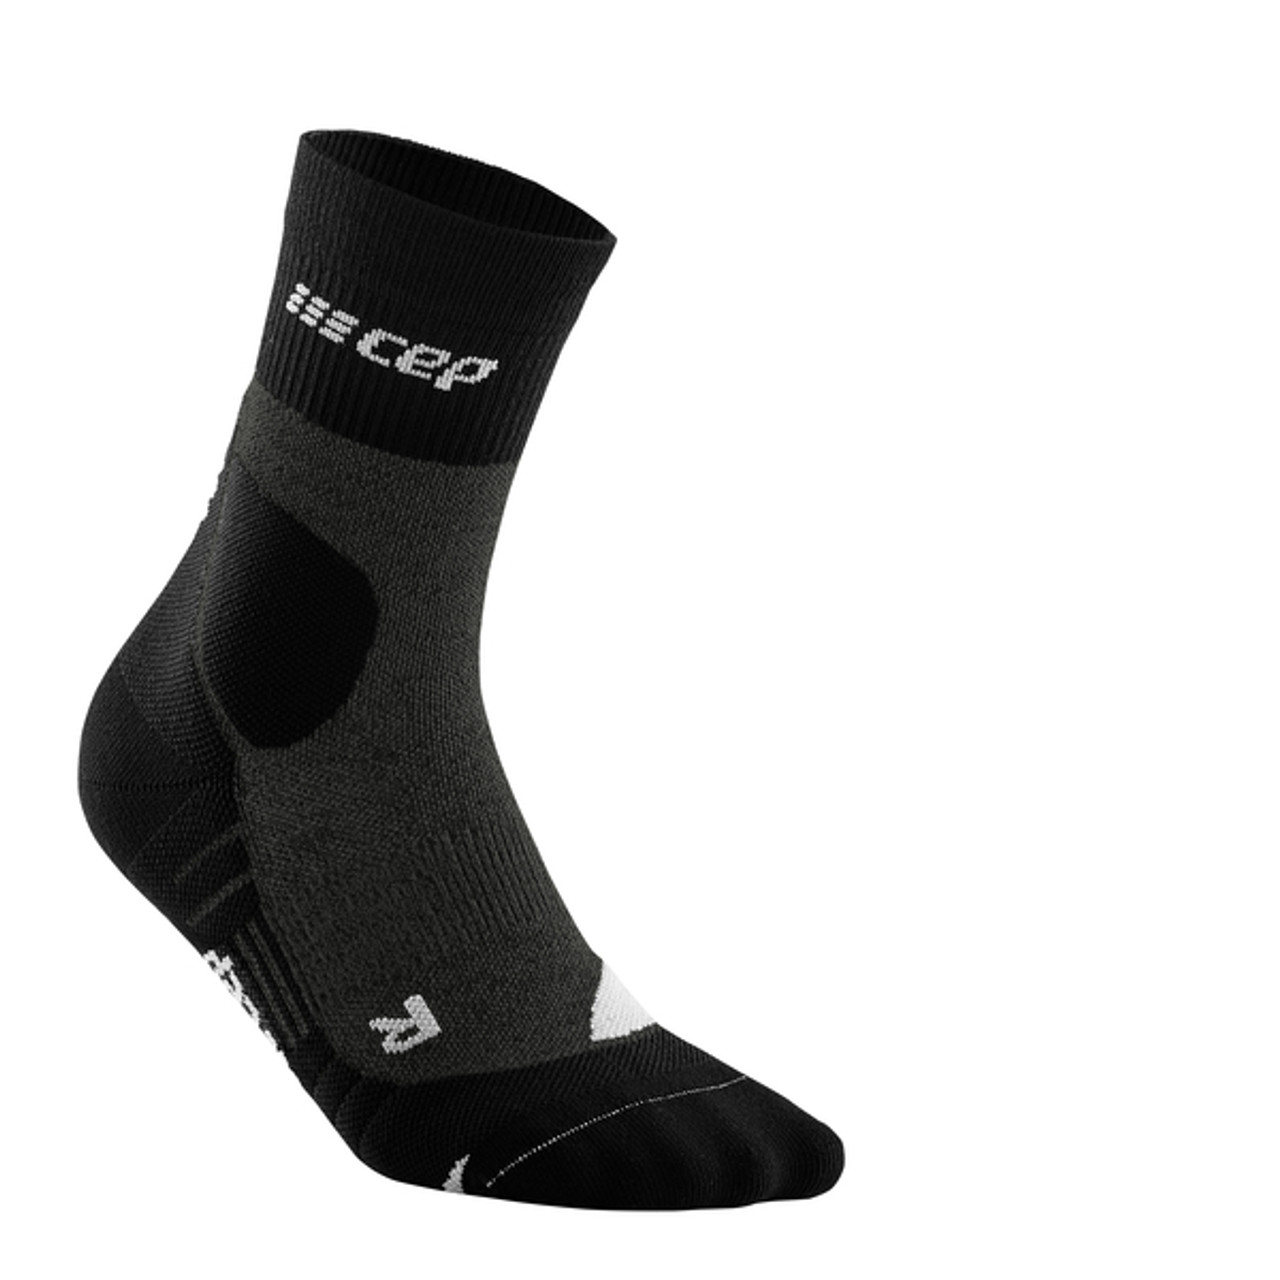 CEP Hiking Merino Mid Cut Socks for Women - Compression Health